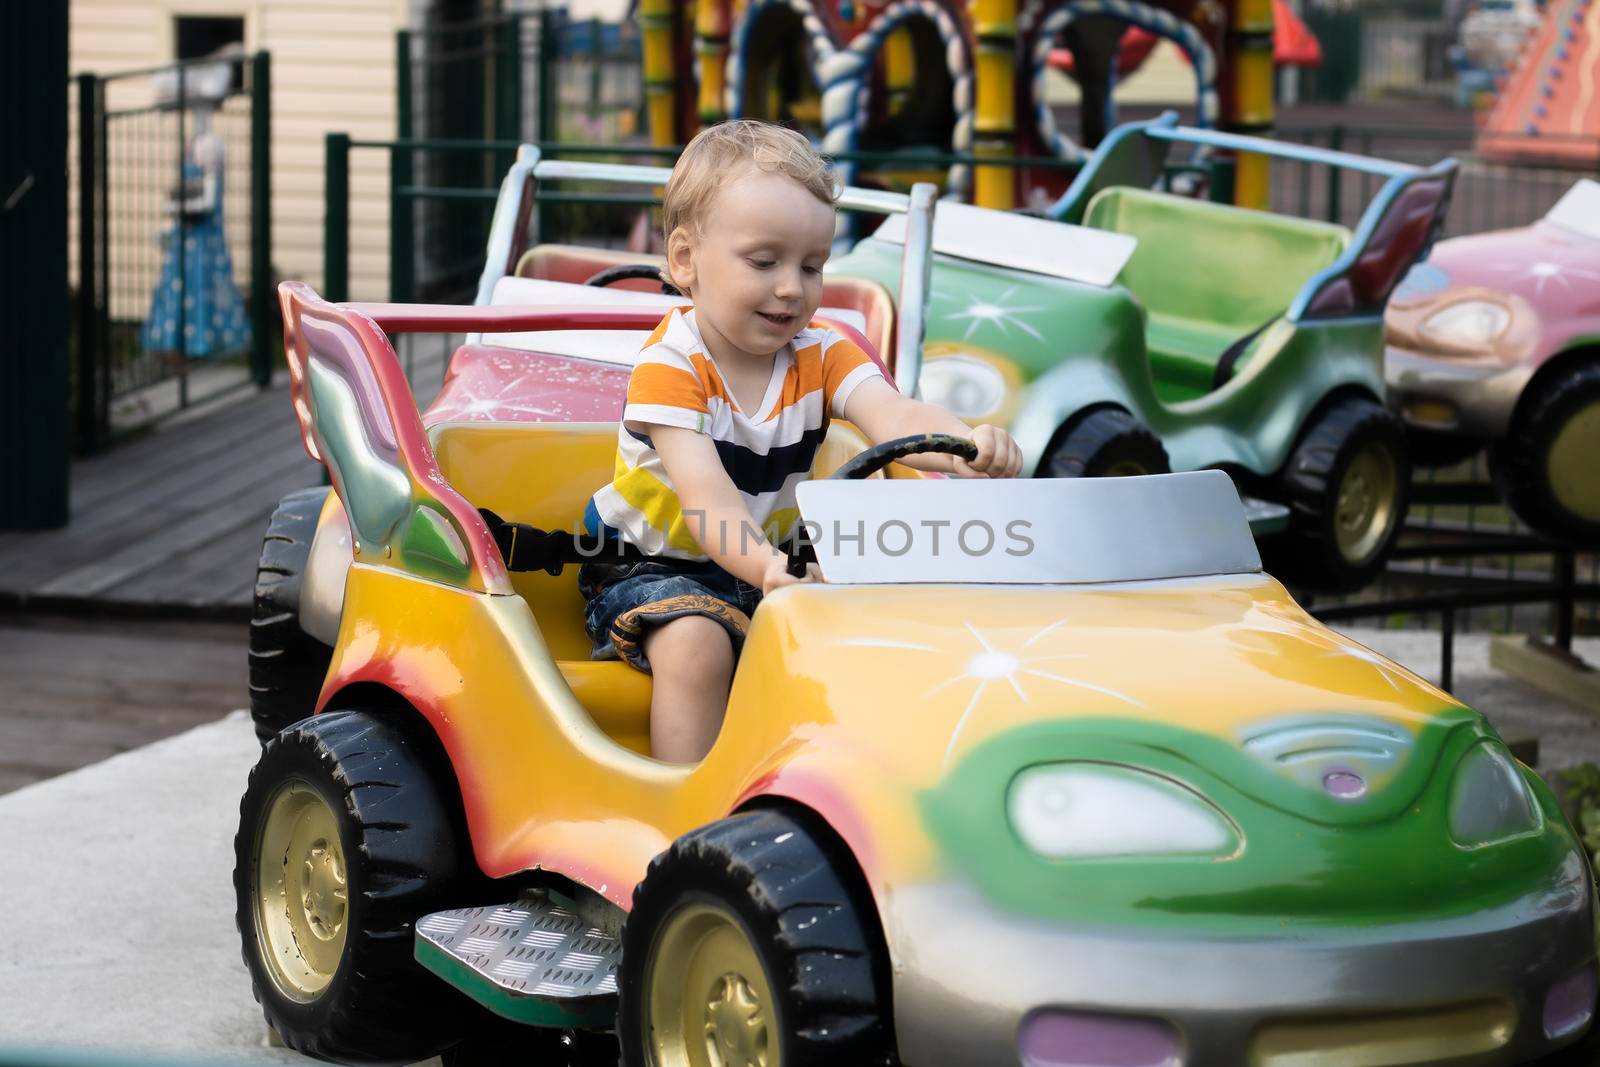 A child rides a car in the amusement park